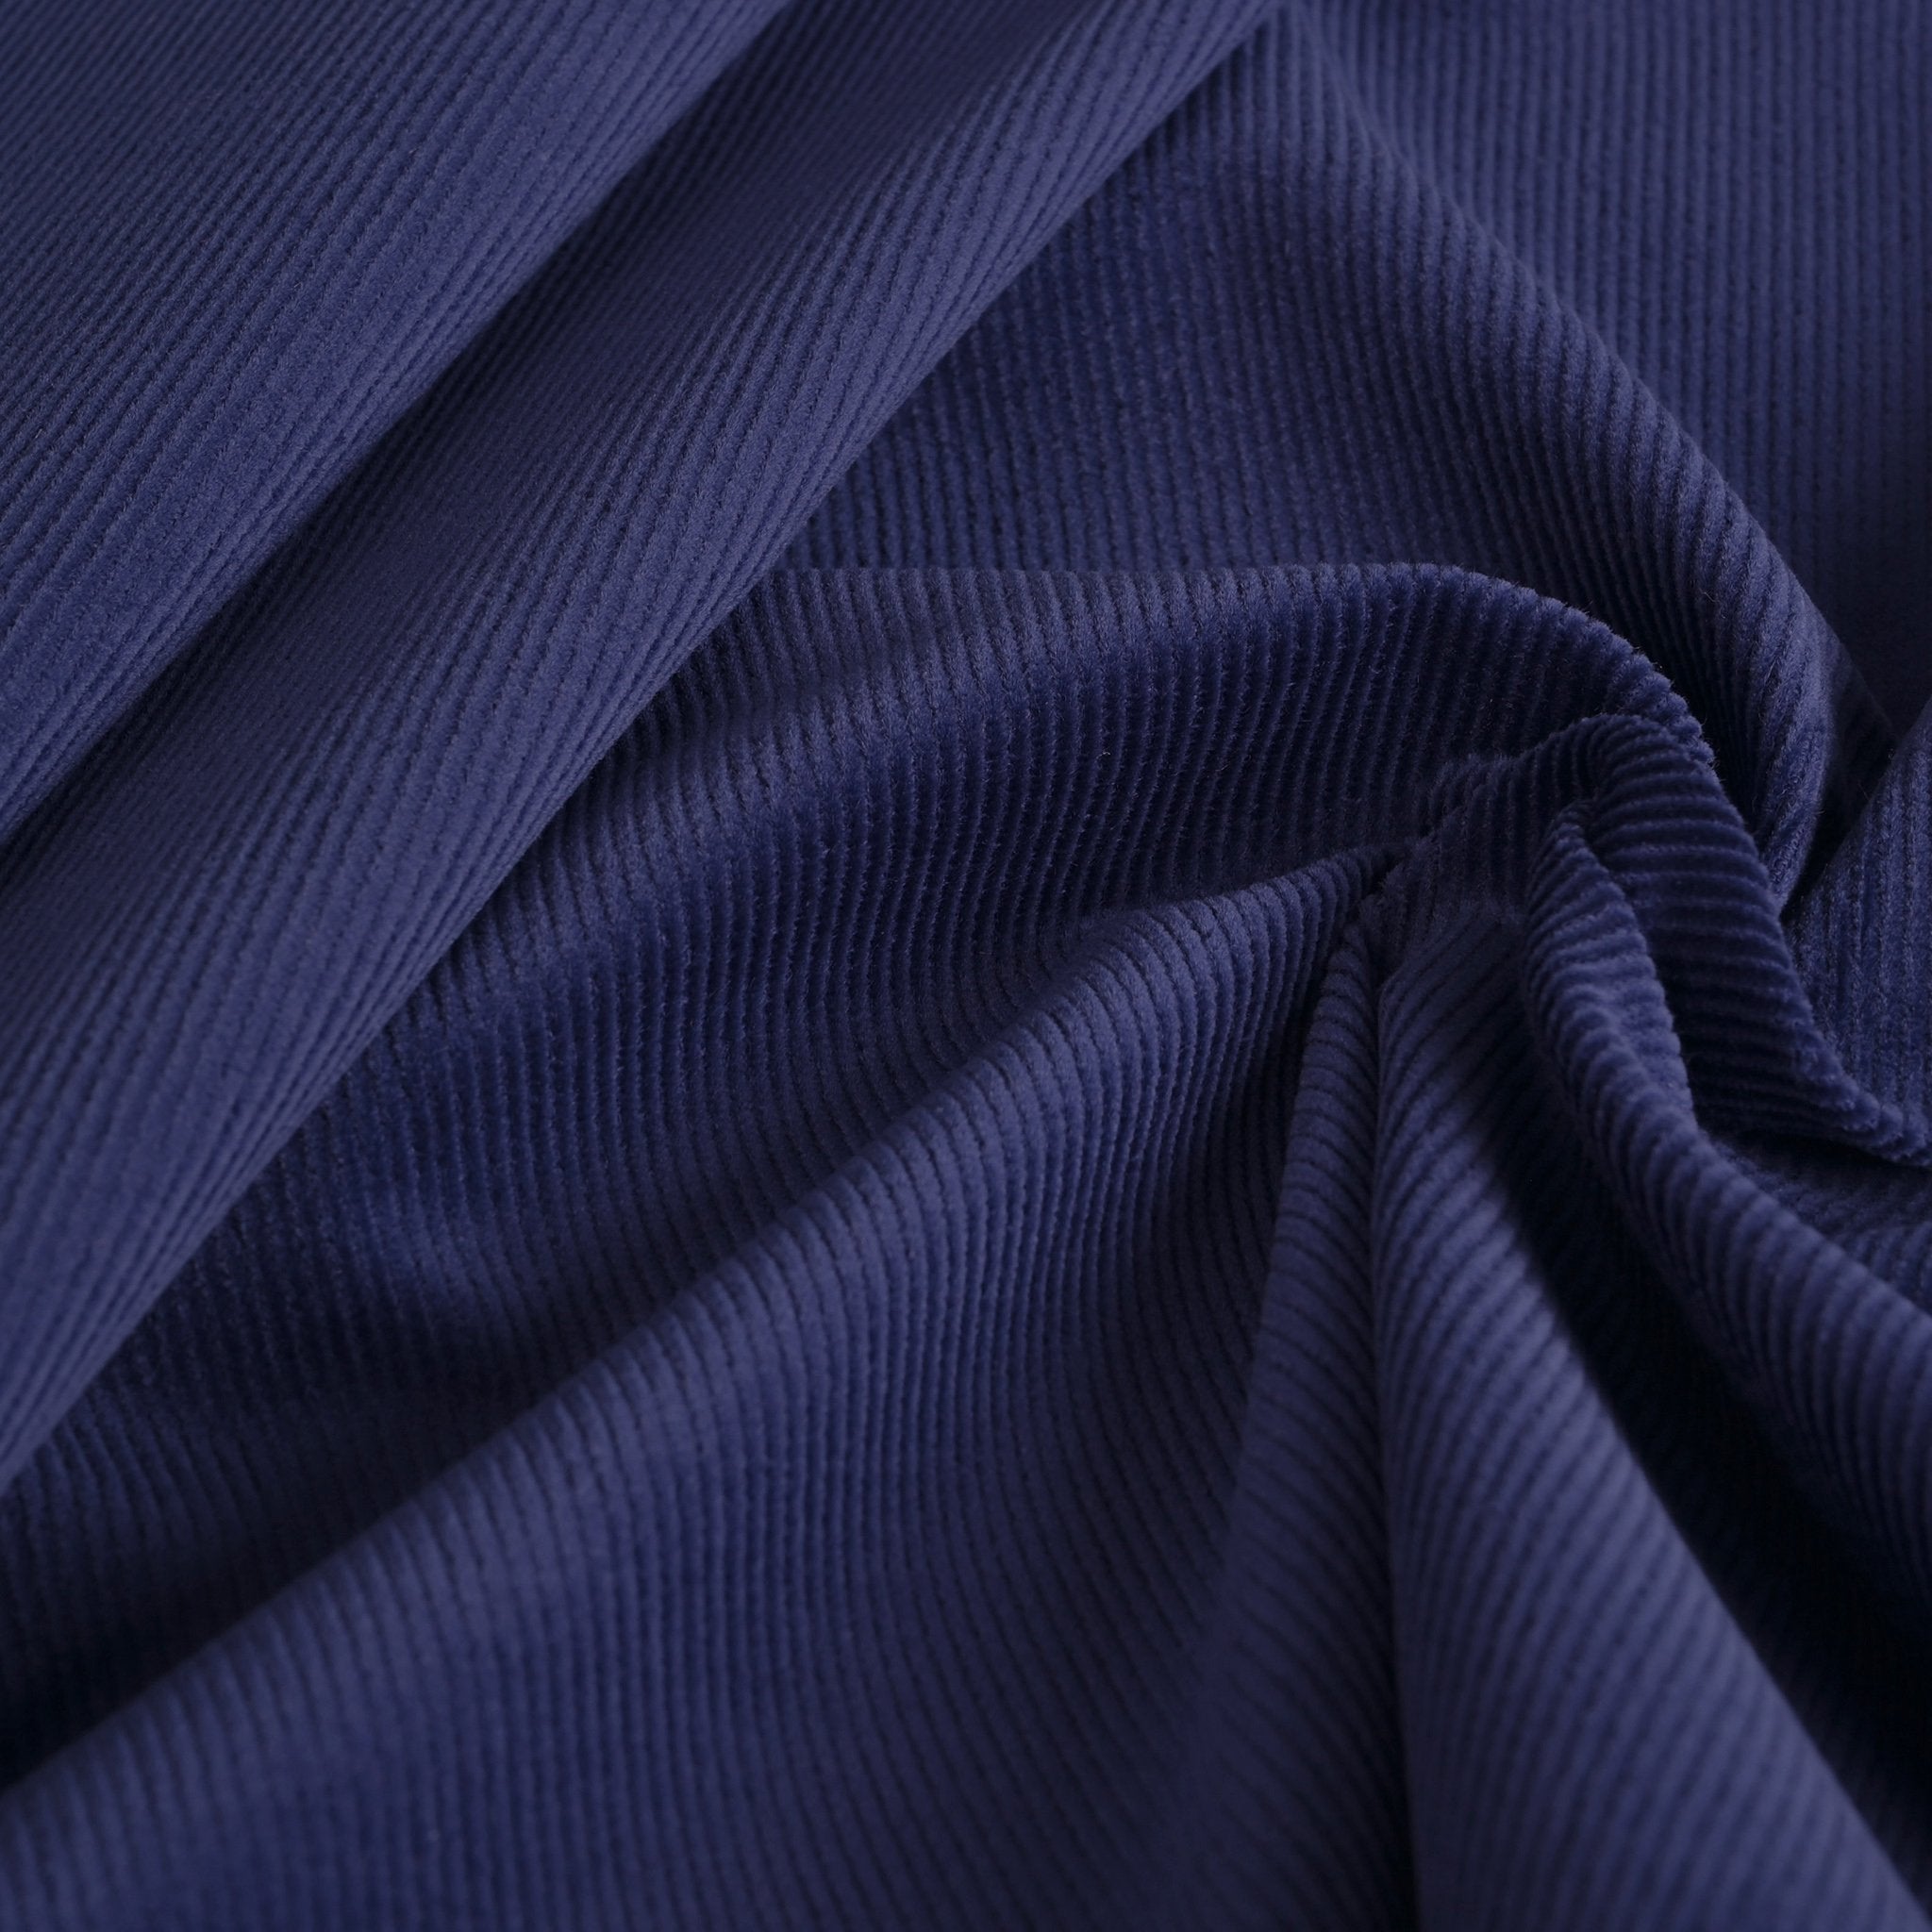 Royal Blue Corduroy Fabric 3880